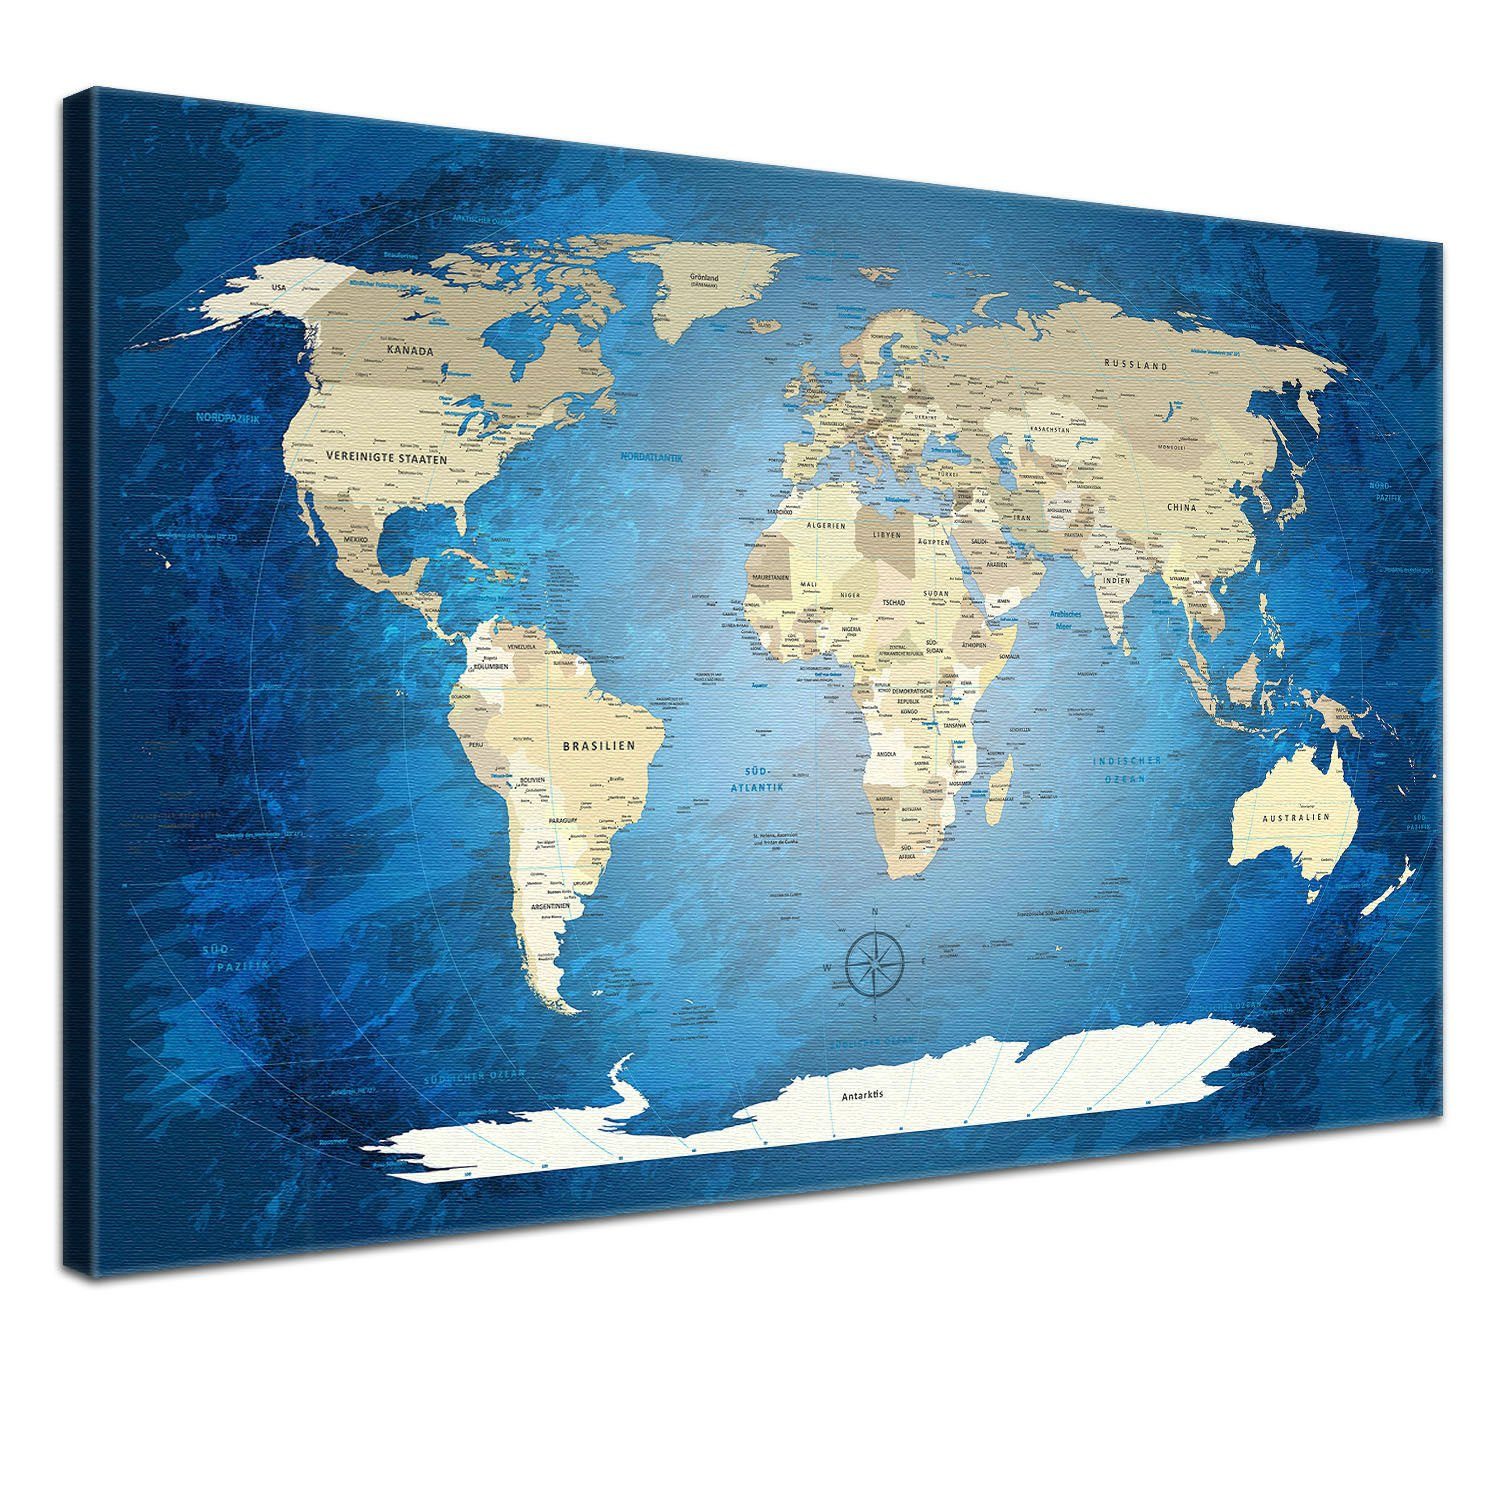 LANA KK Leinwandbild Weltkarte Pinnwand zum markieren von Reisezielen, deutsche Beschriftung Blue Ocean